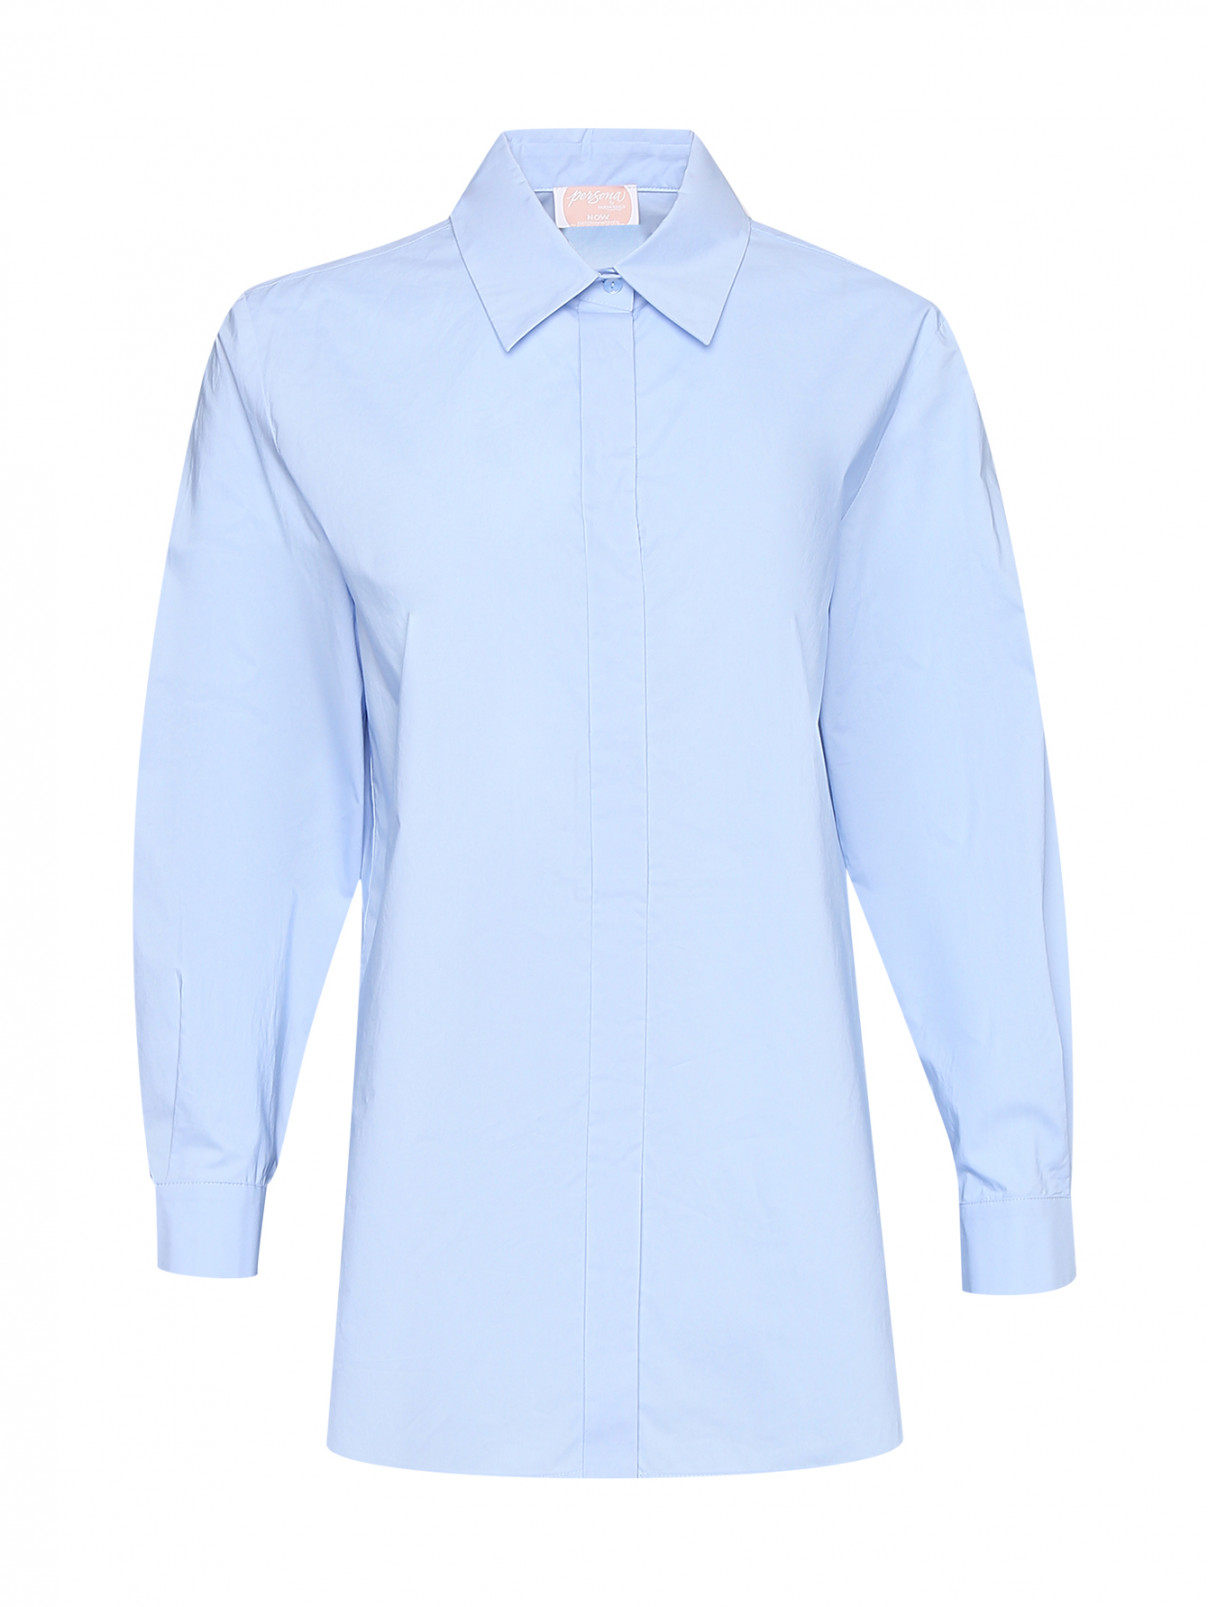 Базовая рубашка из хлопка Persona by Marina Rinaldi  –  Общий вид  – Цвет:  Синий